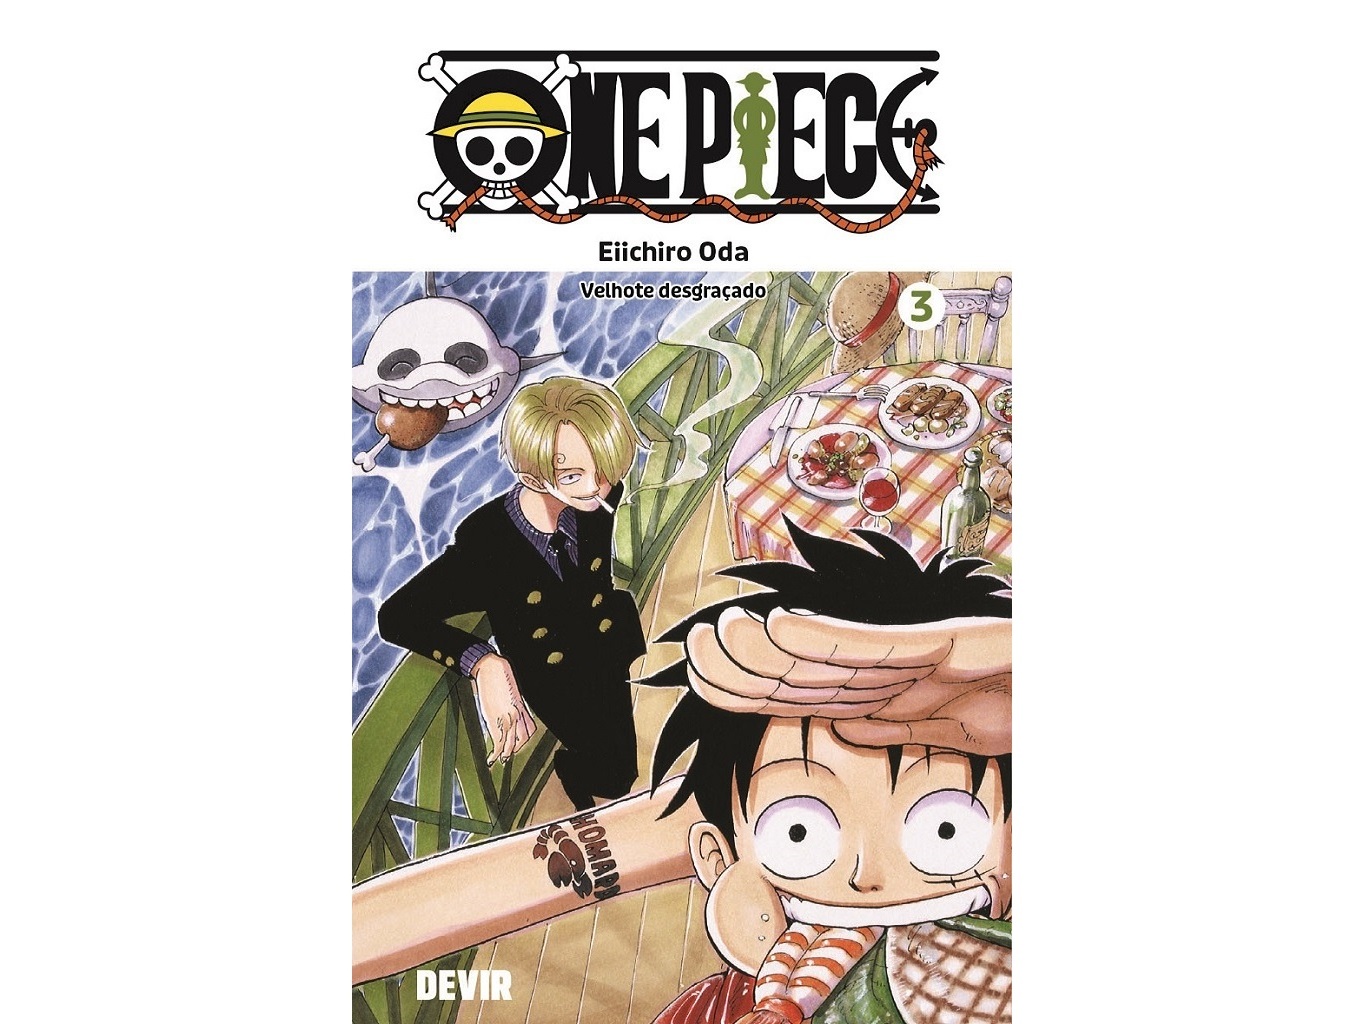 Pin de Zero em One Piece Manga  Mangá one piece, Ler mangá, One piece